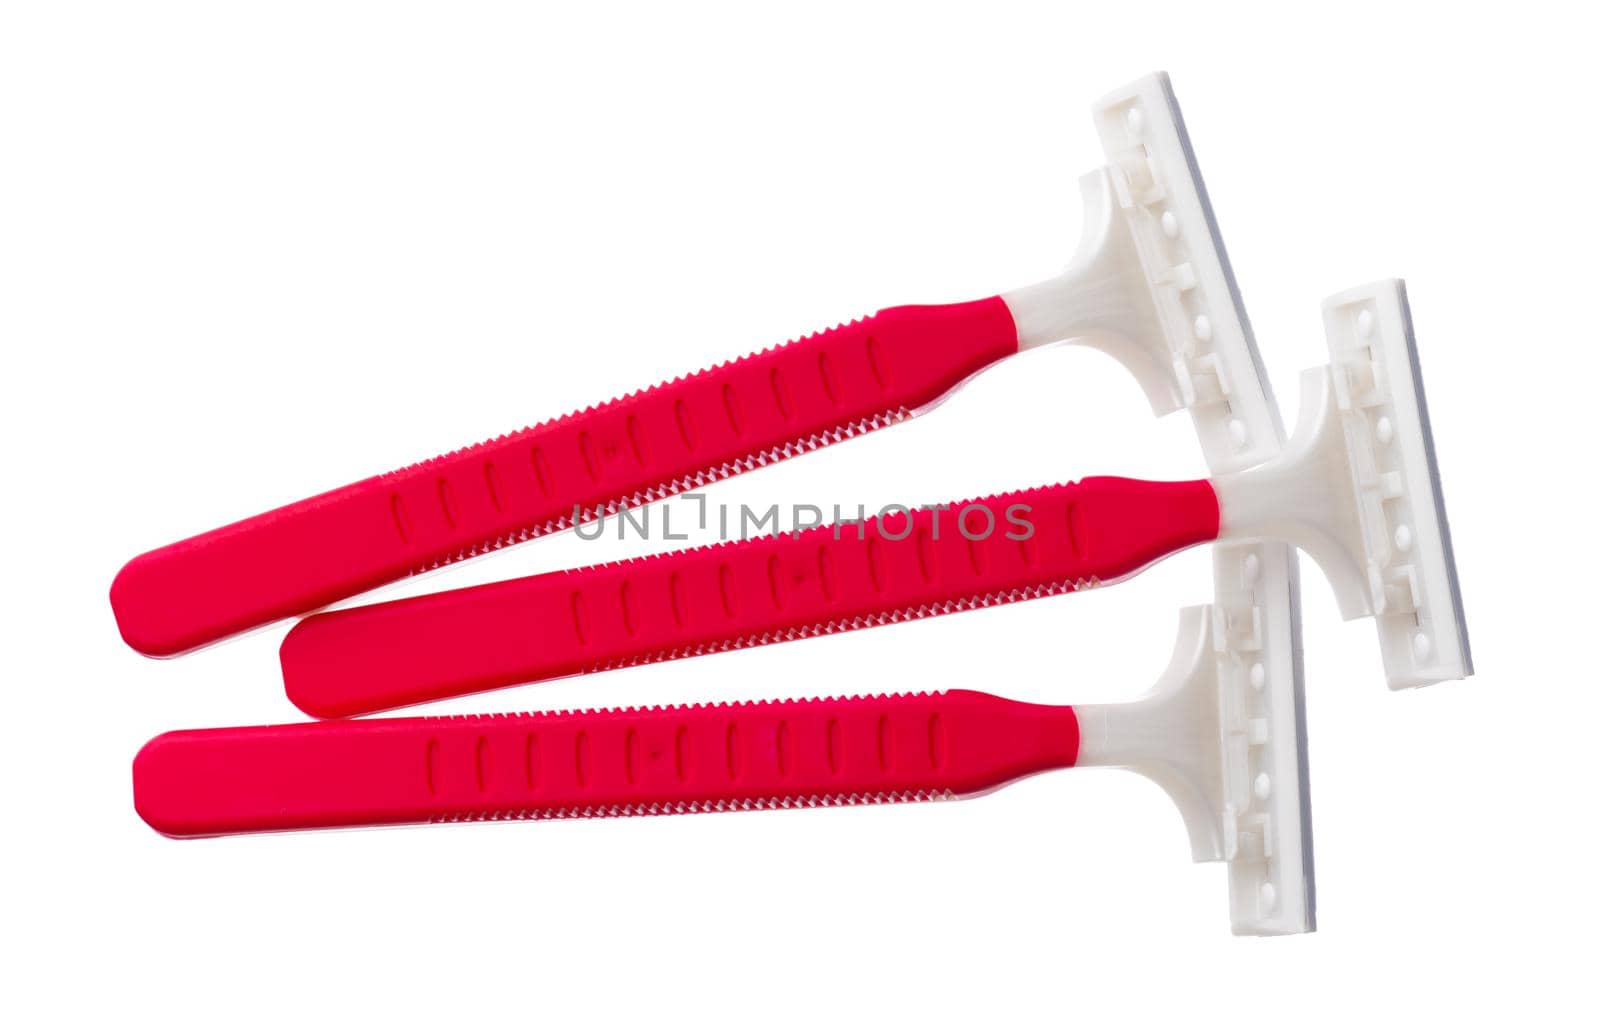 Set of disposable shaver razors isolated on white background close up